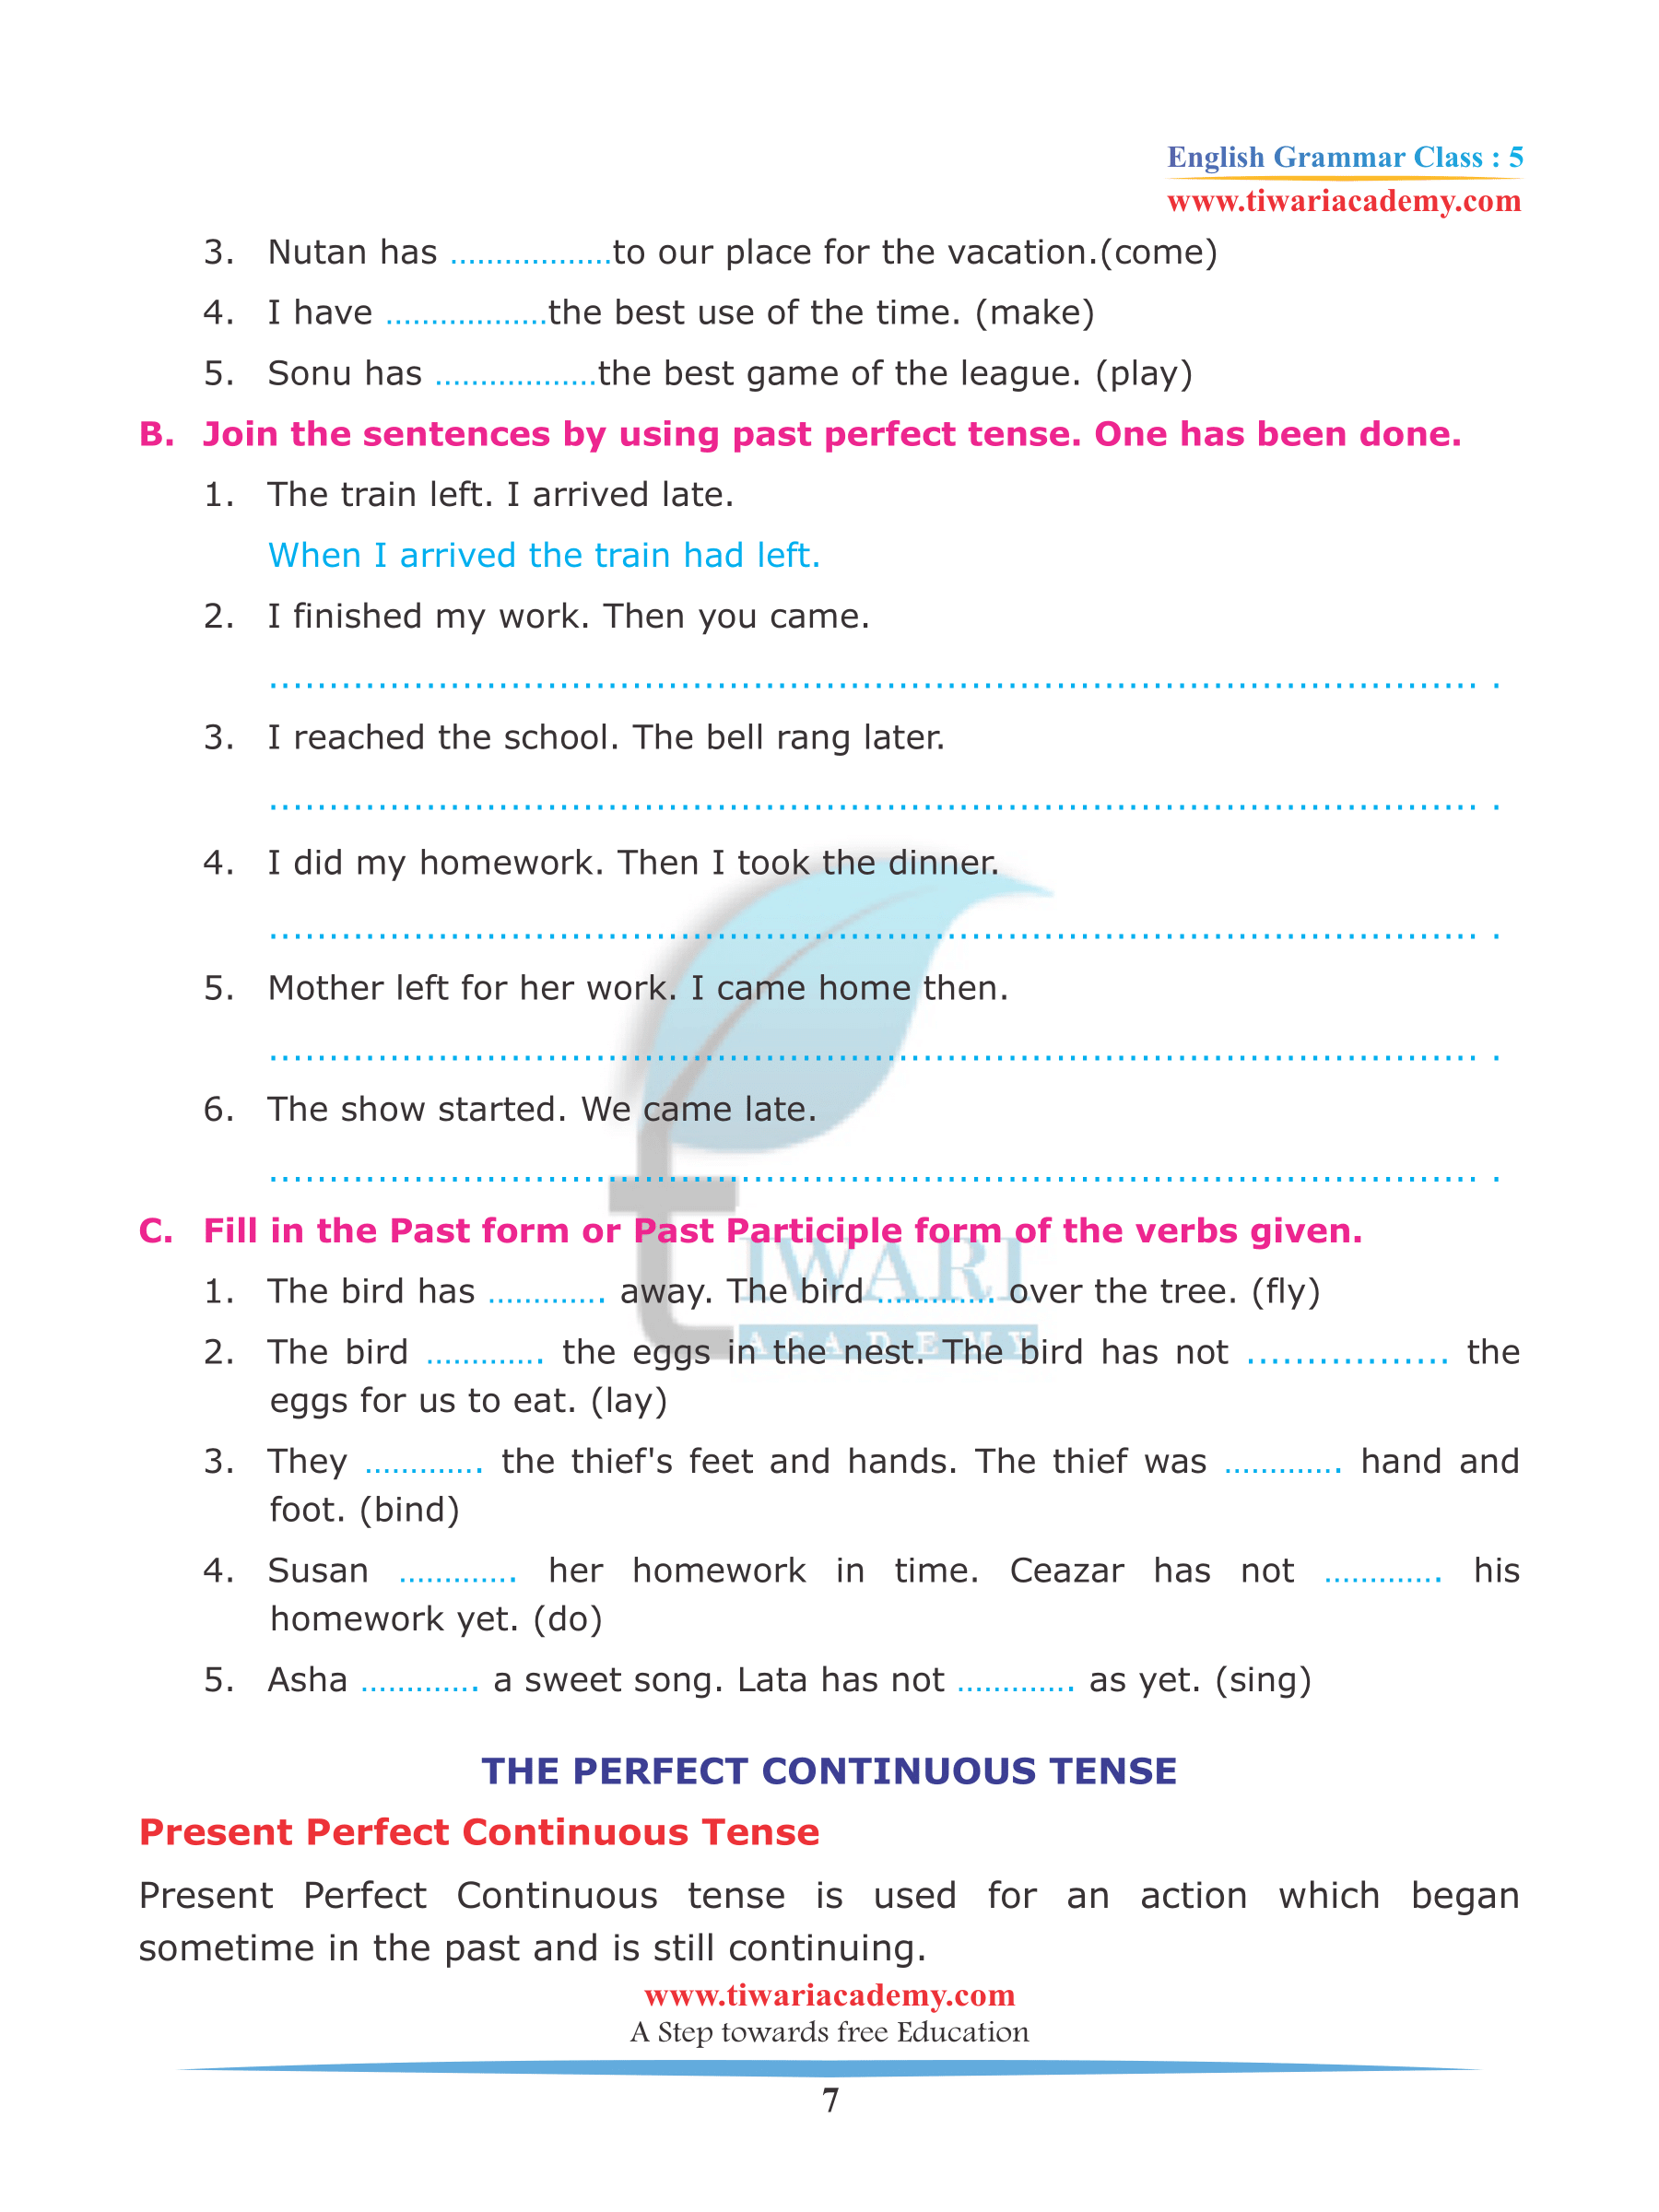 Class 5 English Grammar Chapter 6 Verb and Tense free PDF